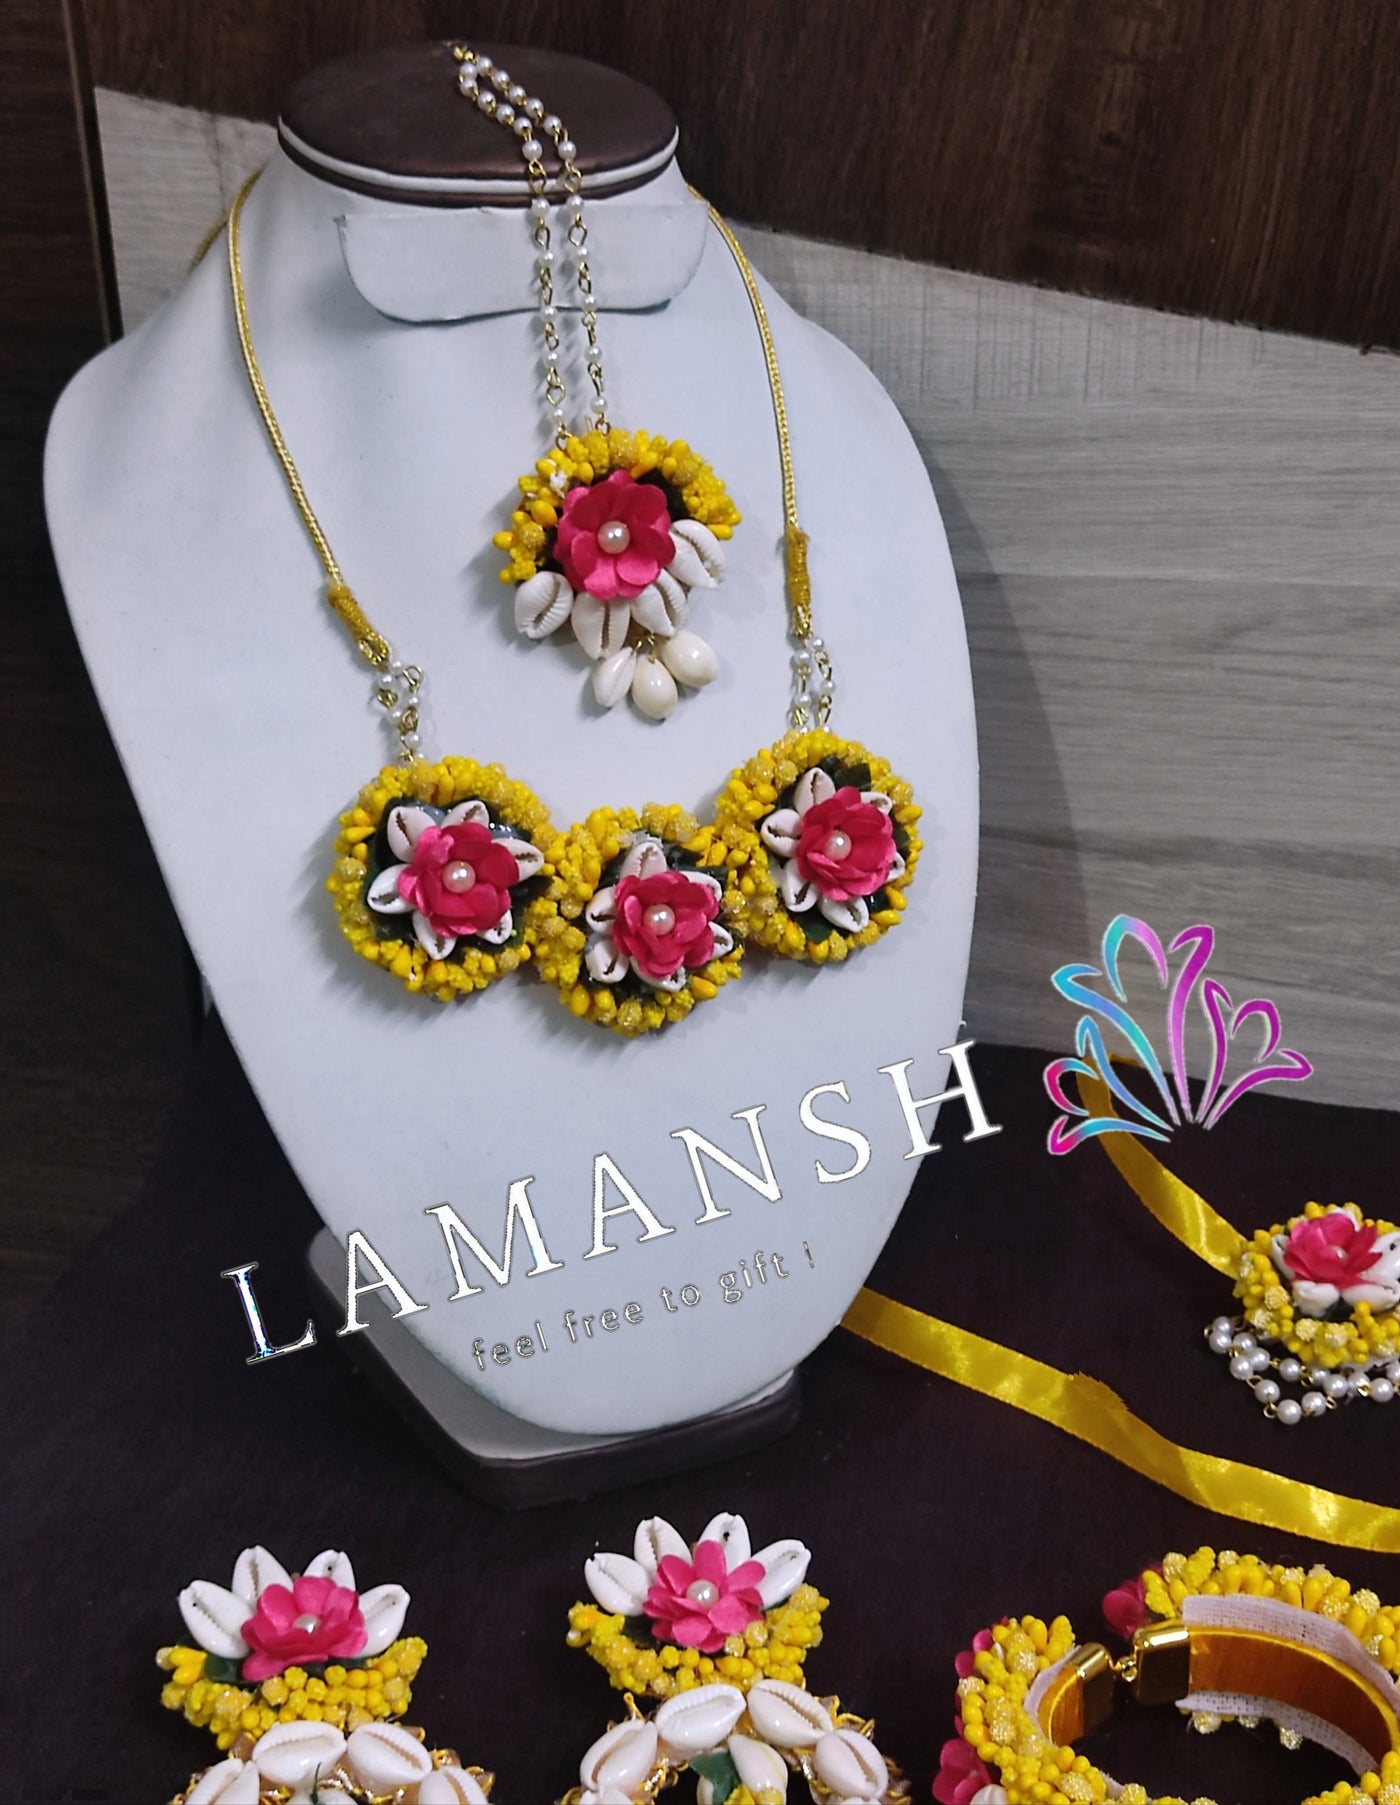 LAMANSH Flower Shell🐚 Jewellery Pink-White-yellow / Standard / Shells 🐚 Style LAMANSH® Shell Floral Jewellery Set 🌺 for Haldi Mehendi Ceremony